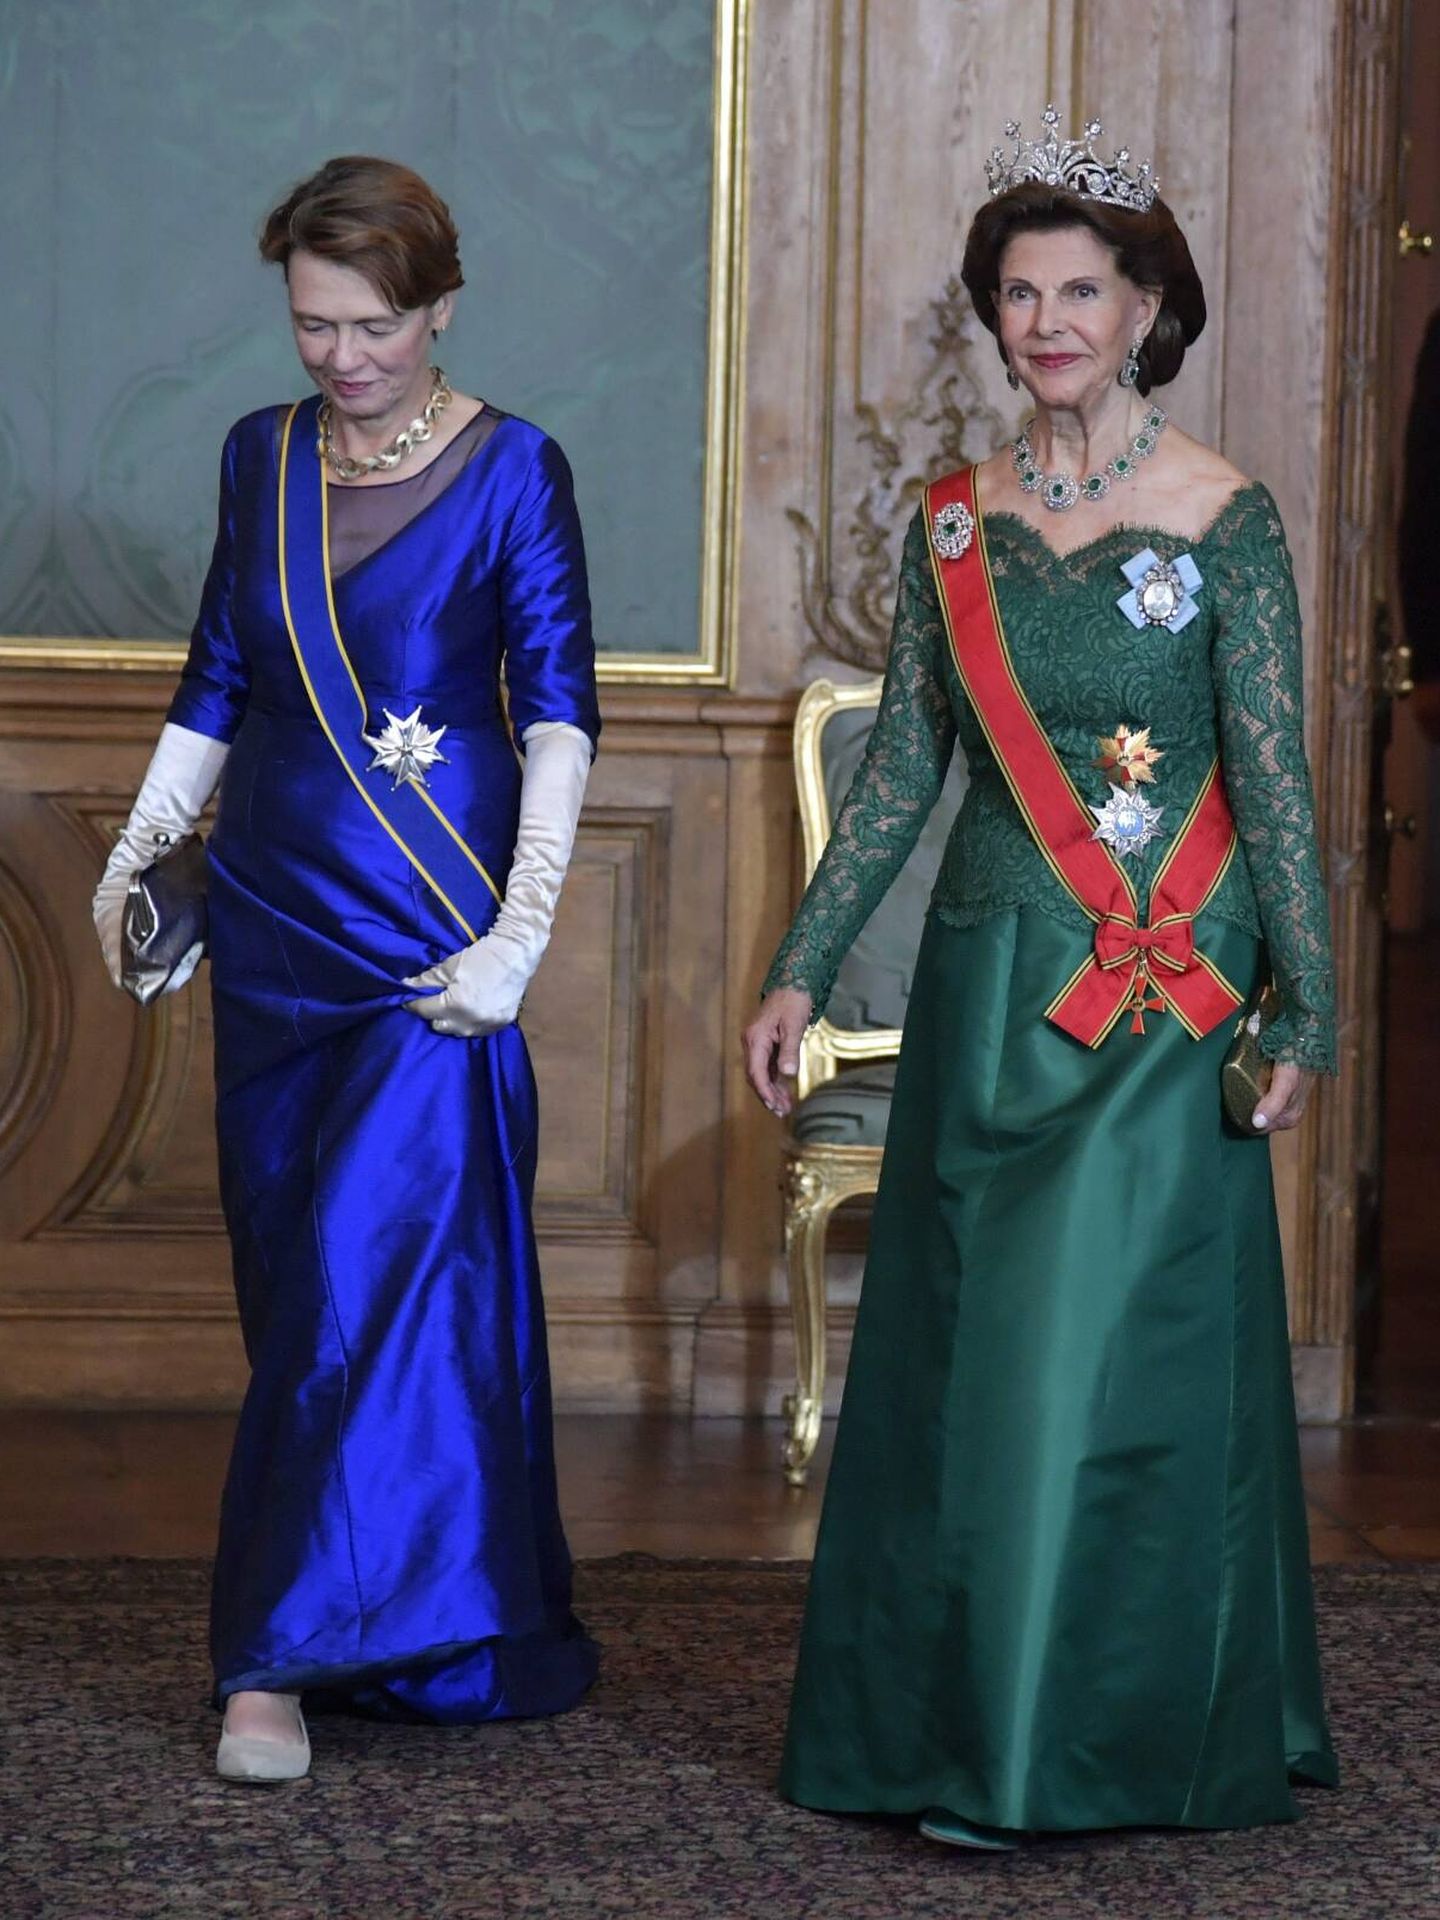 La reina Silvia, junto a la esposa del presidente alemán. (Cordon Press)